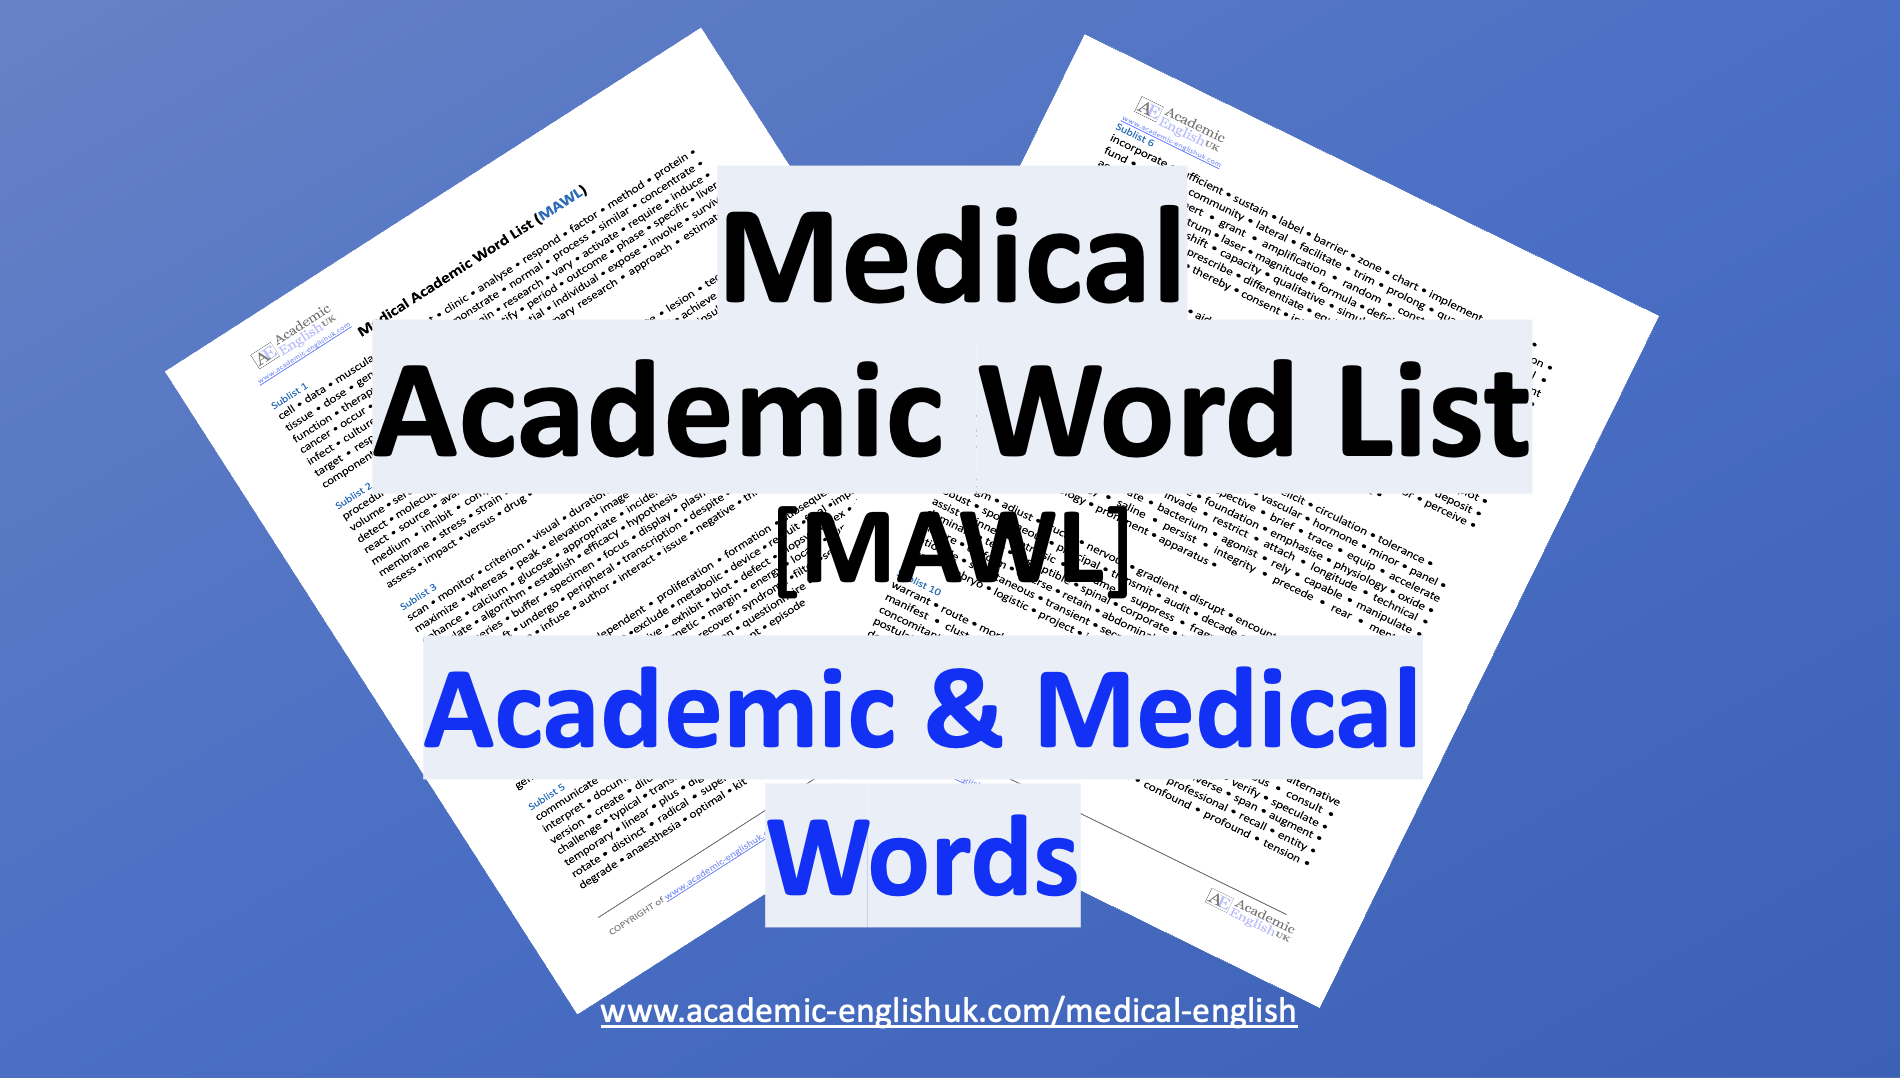 Academic Word List Sublist 1. analysis (n) PRONUNCIATION: anALysis